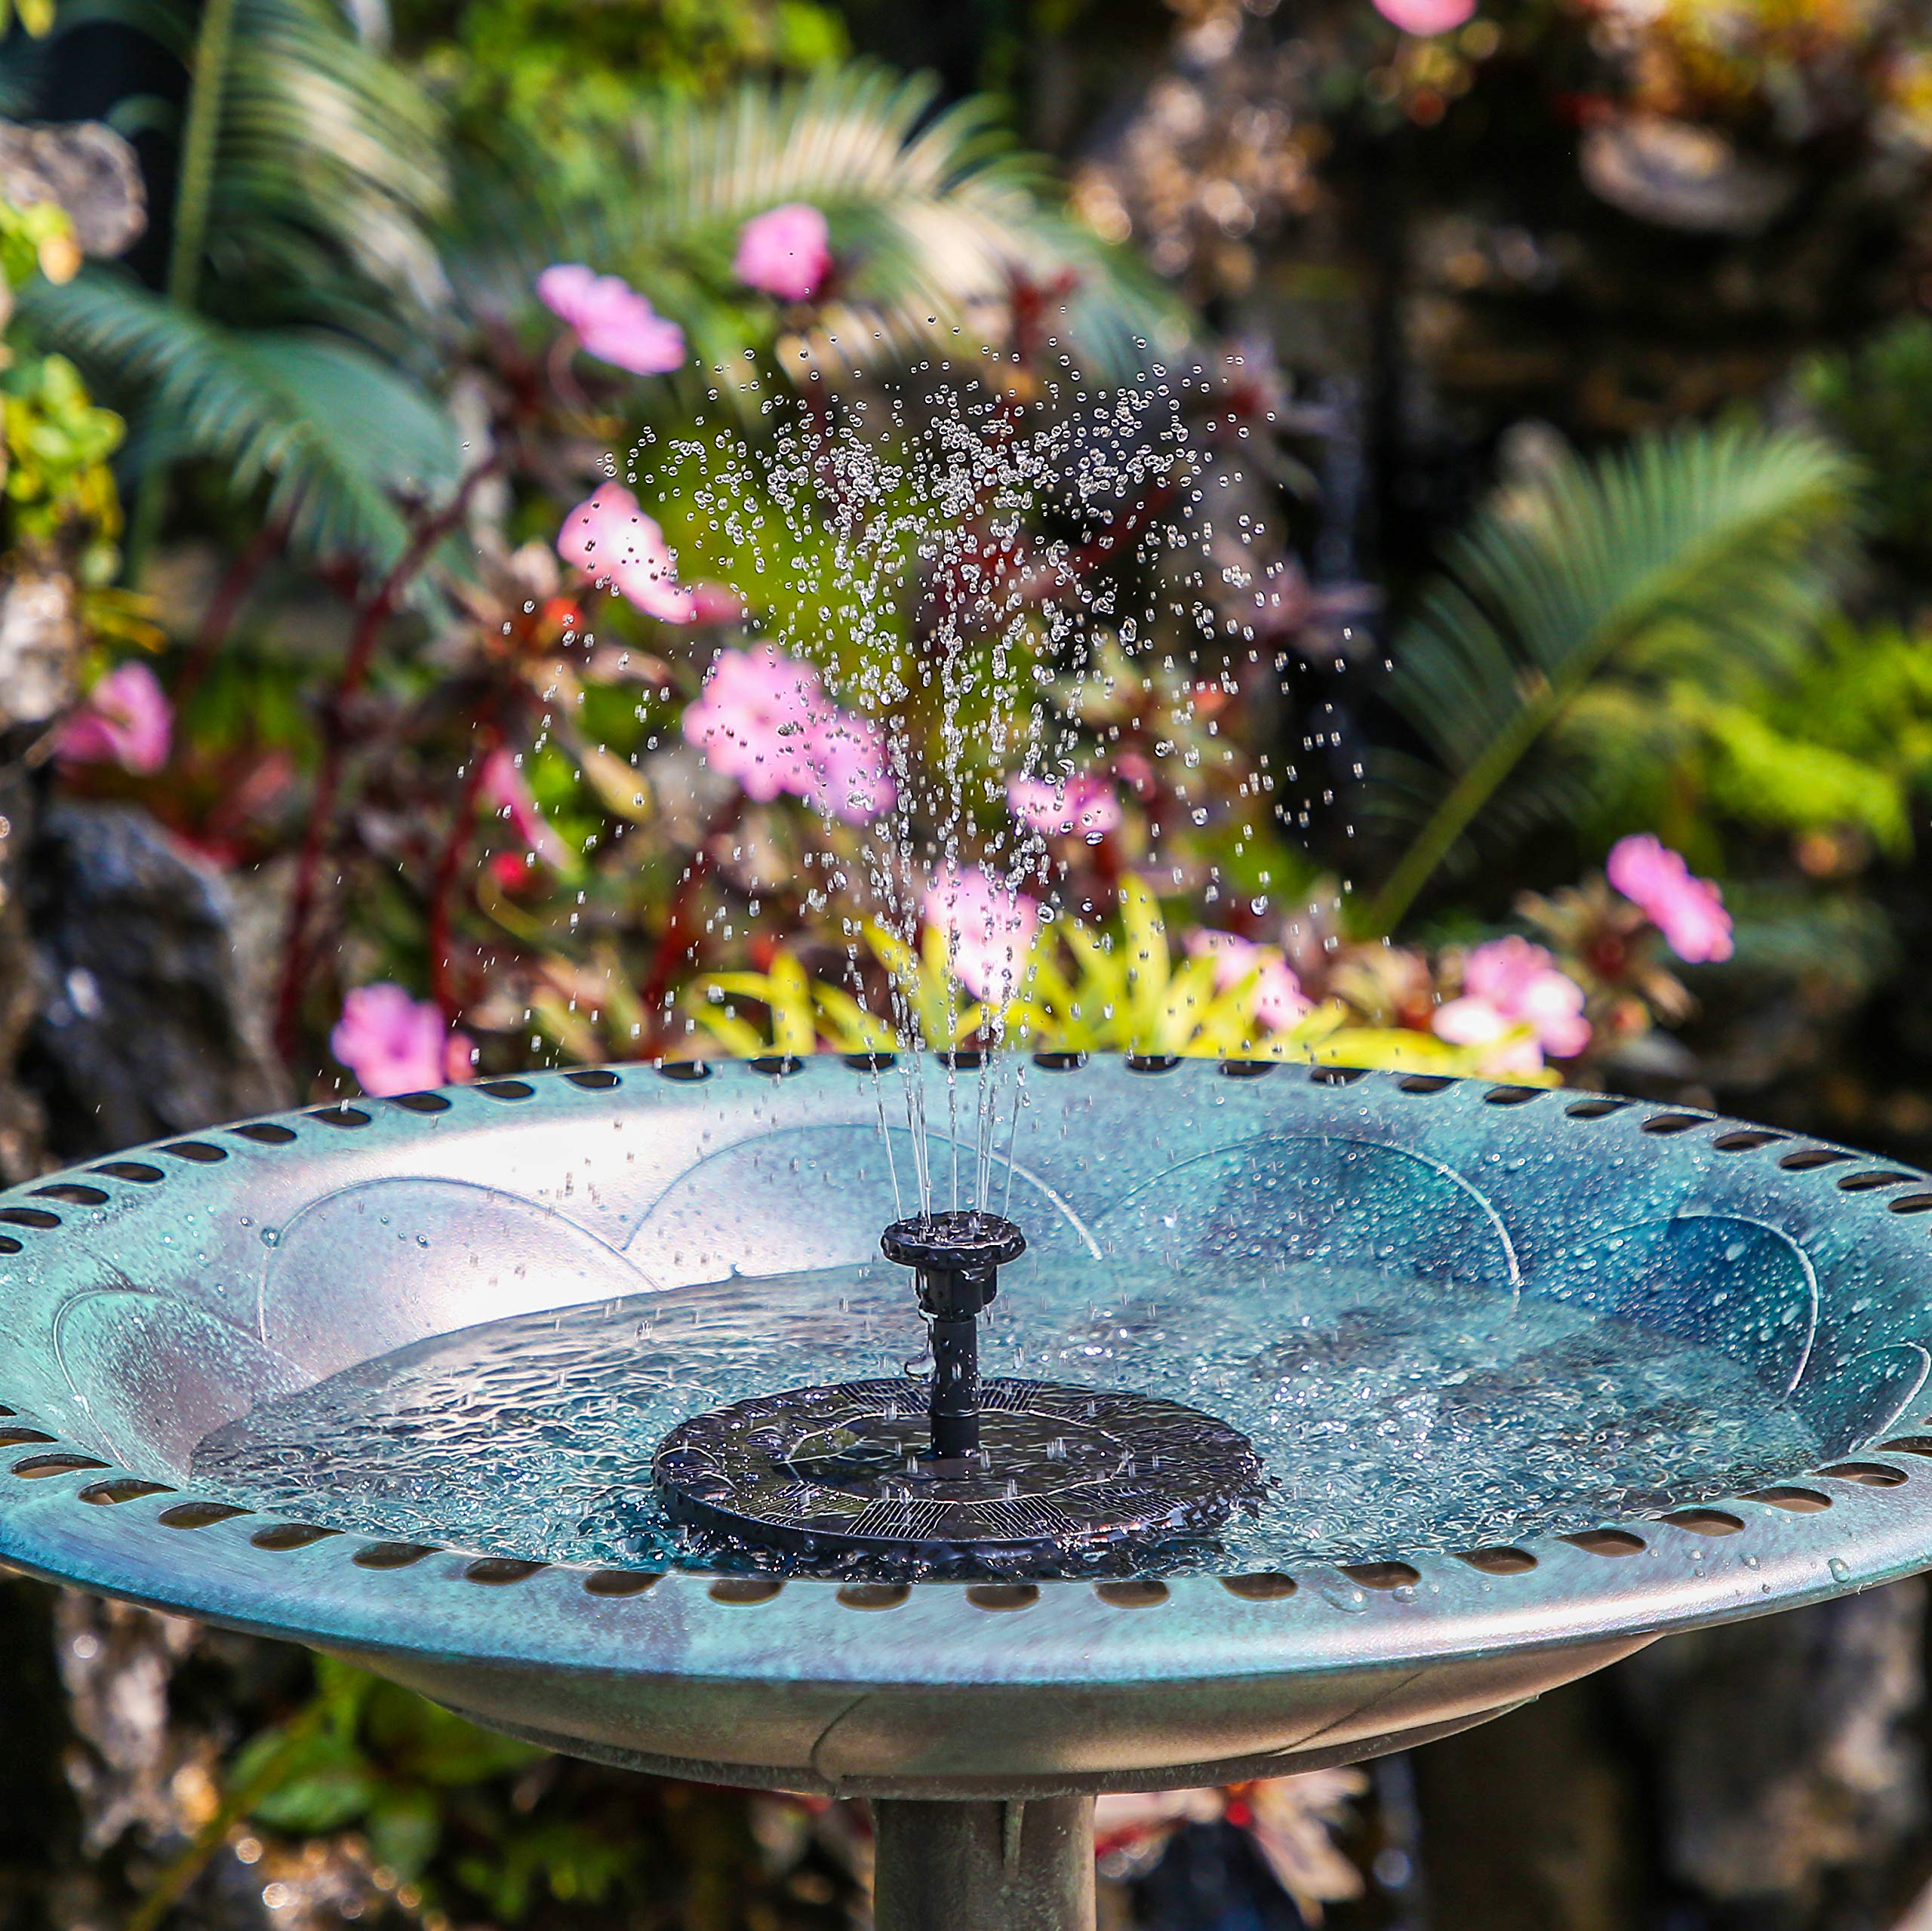 How to Encourage Wildlife With a Fun Solar Fountain